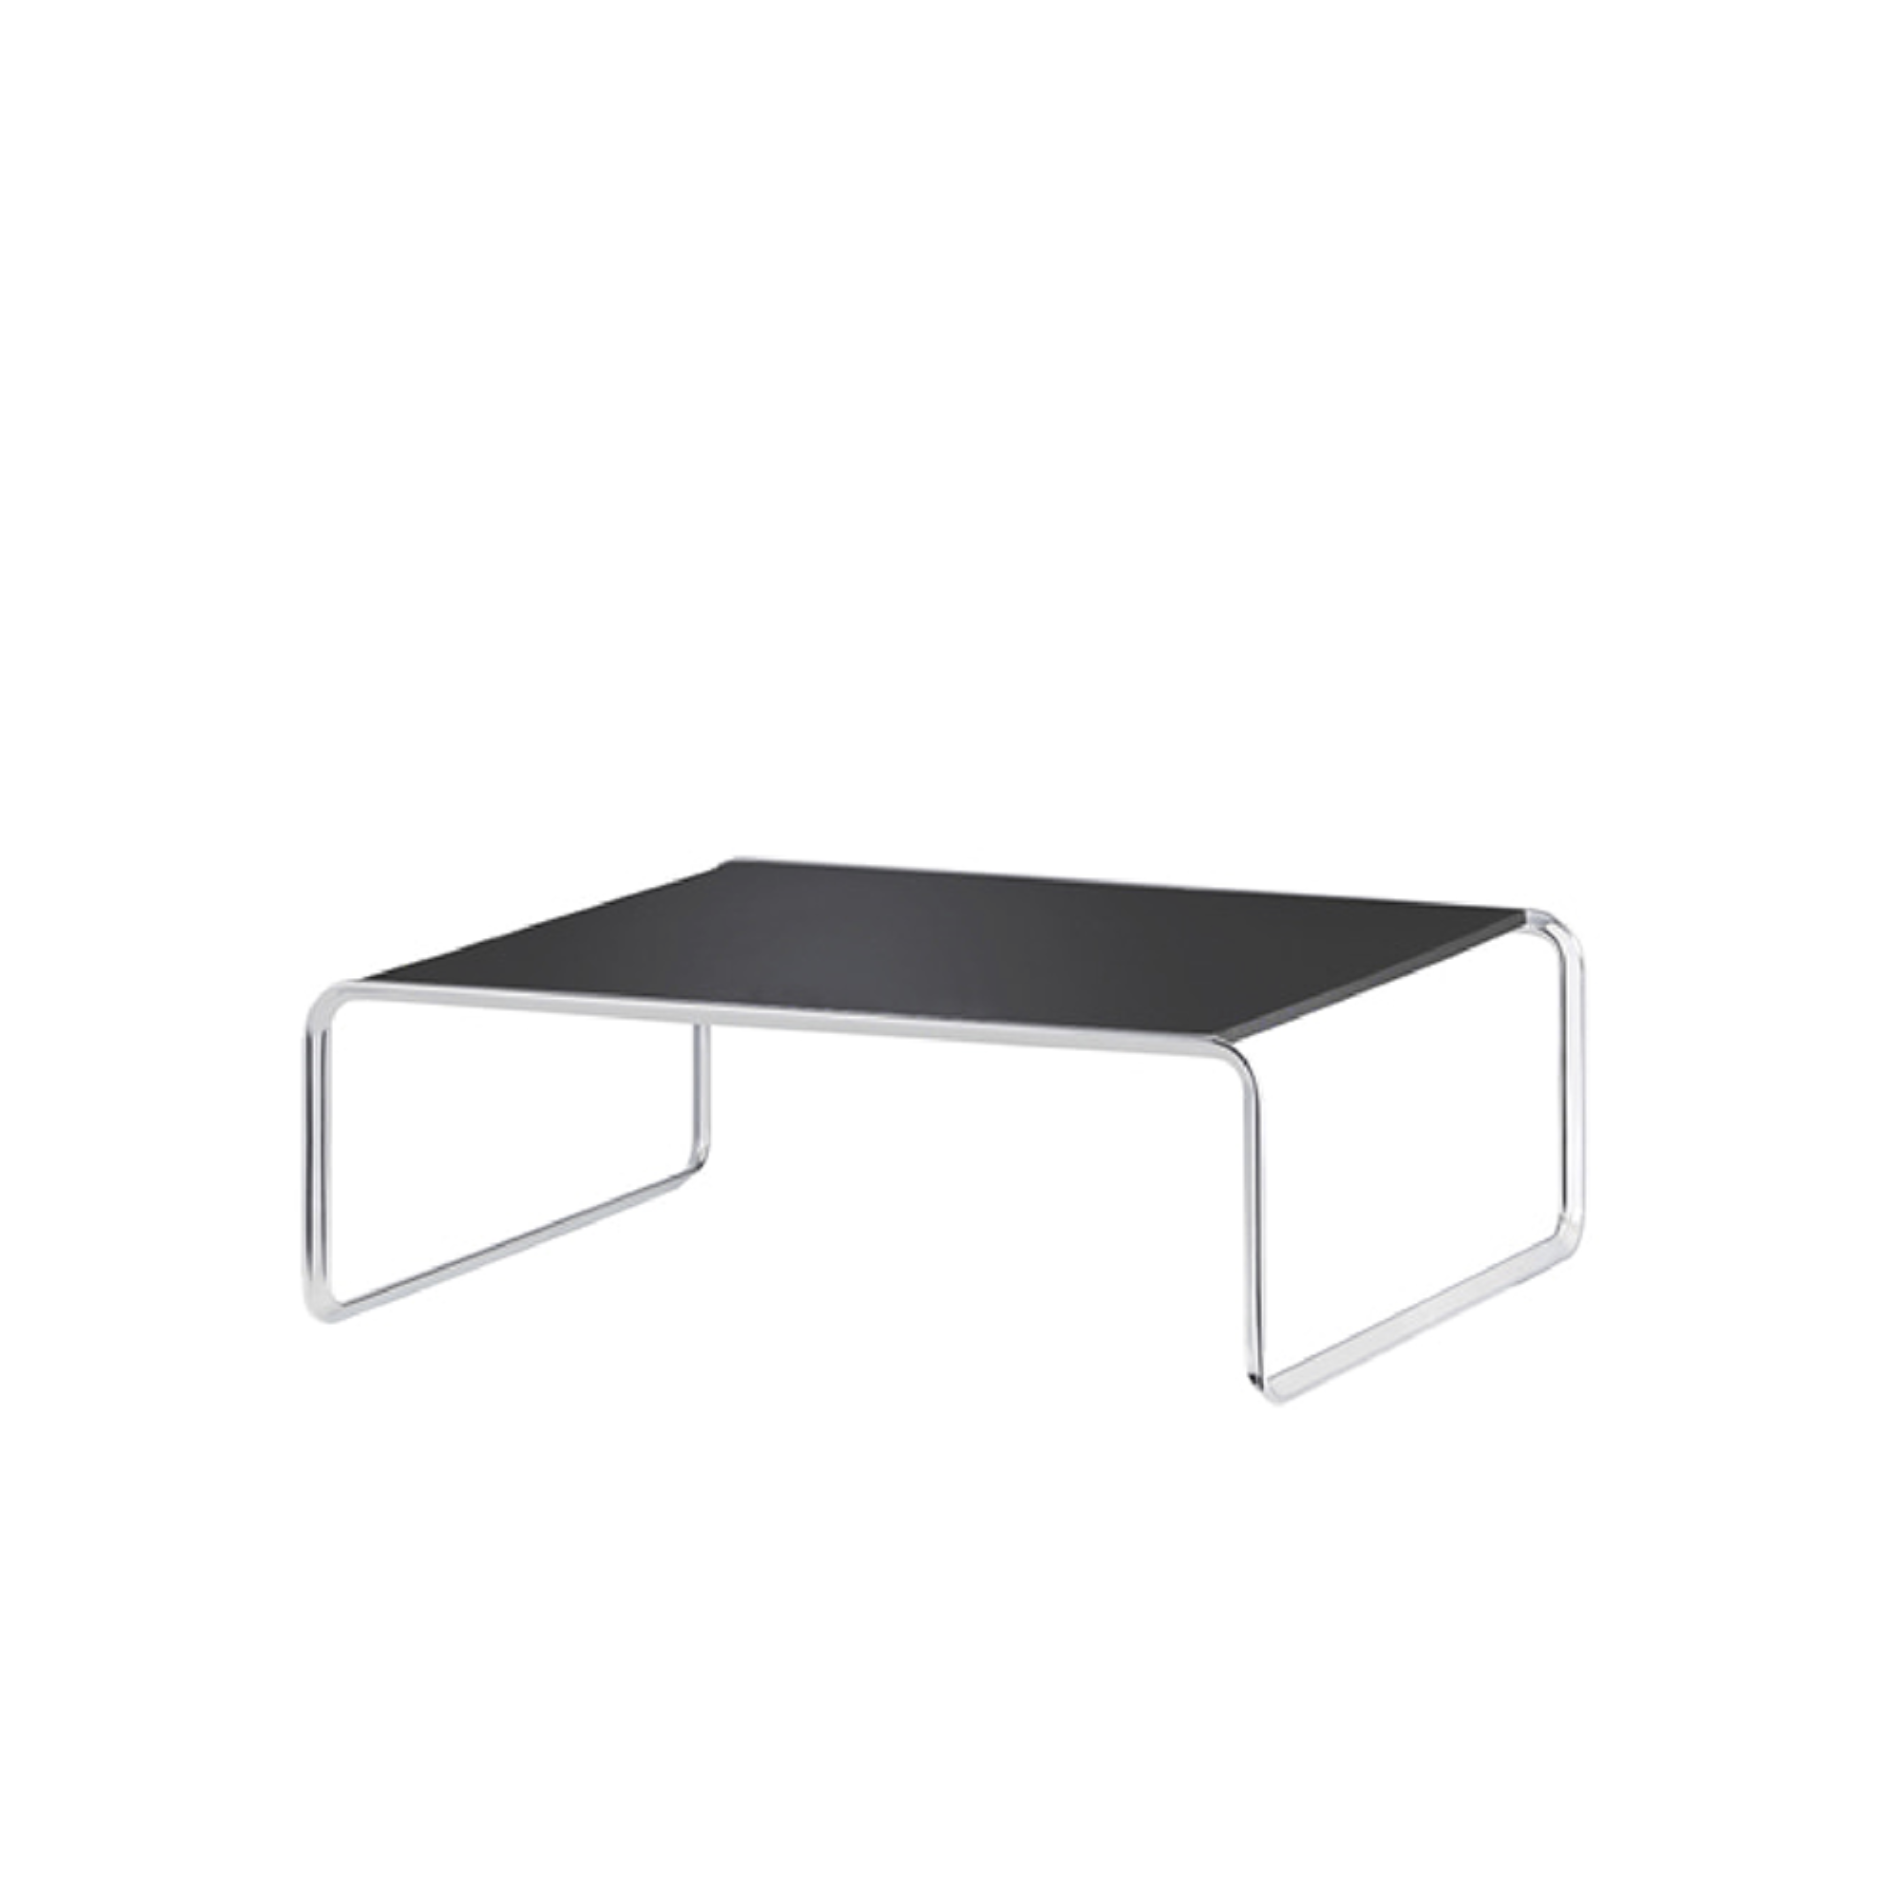 TECTA K1B Oblique Couch Table - Black 86Cm